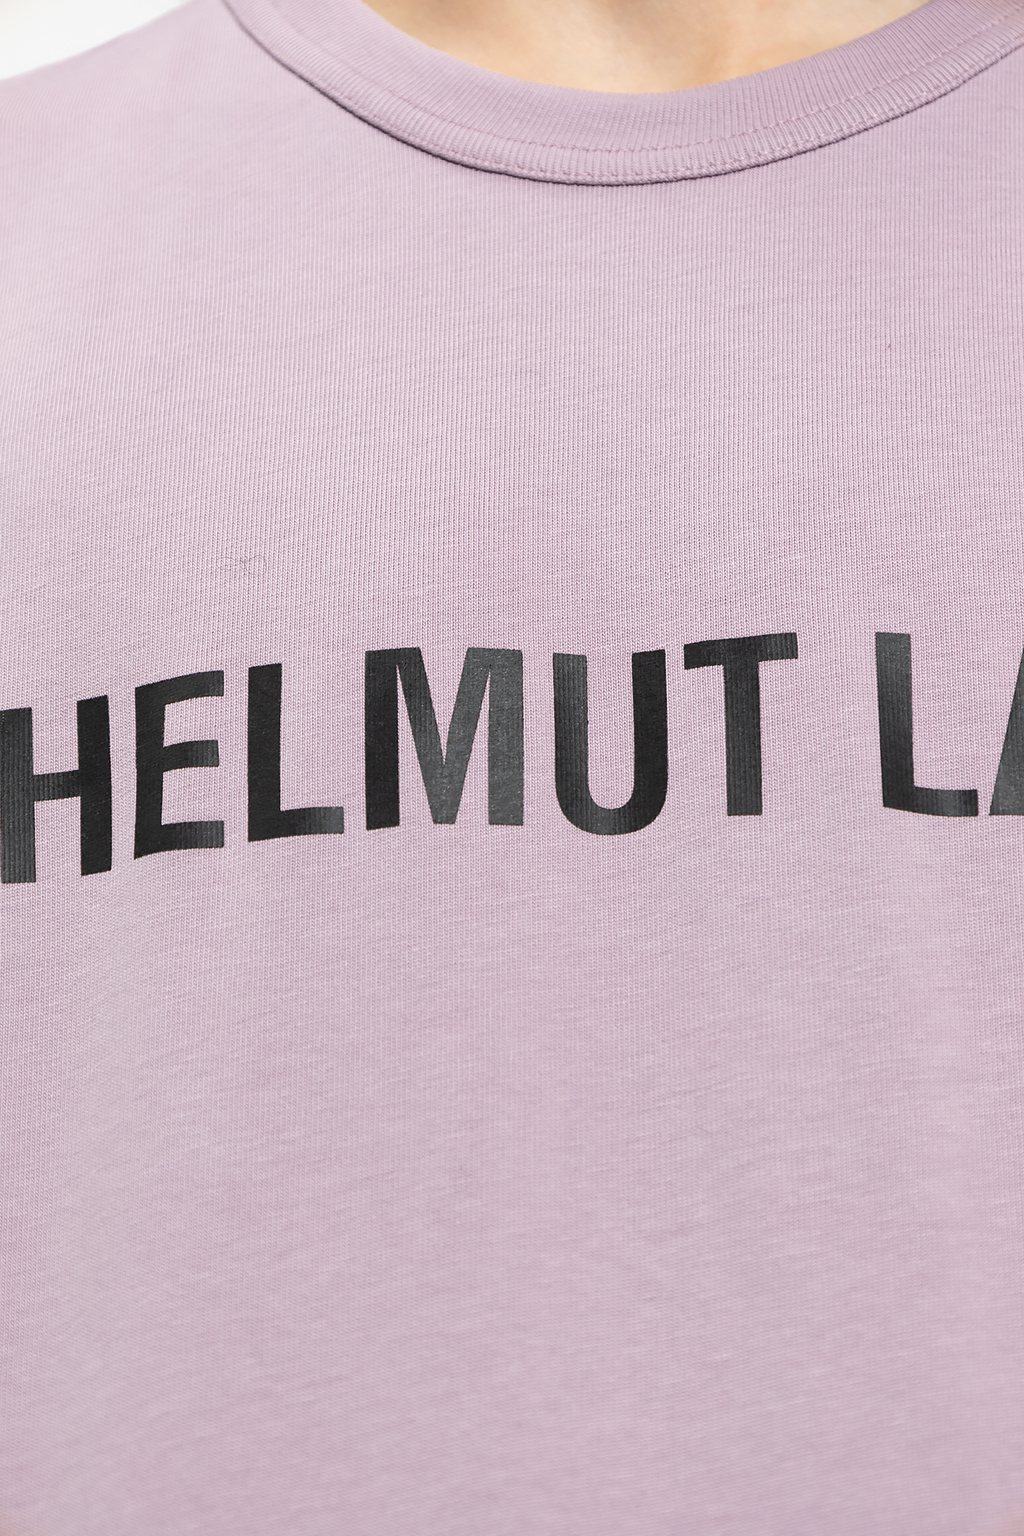 Helmut Lang T-shirt Mostarda with logo